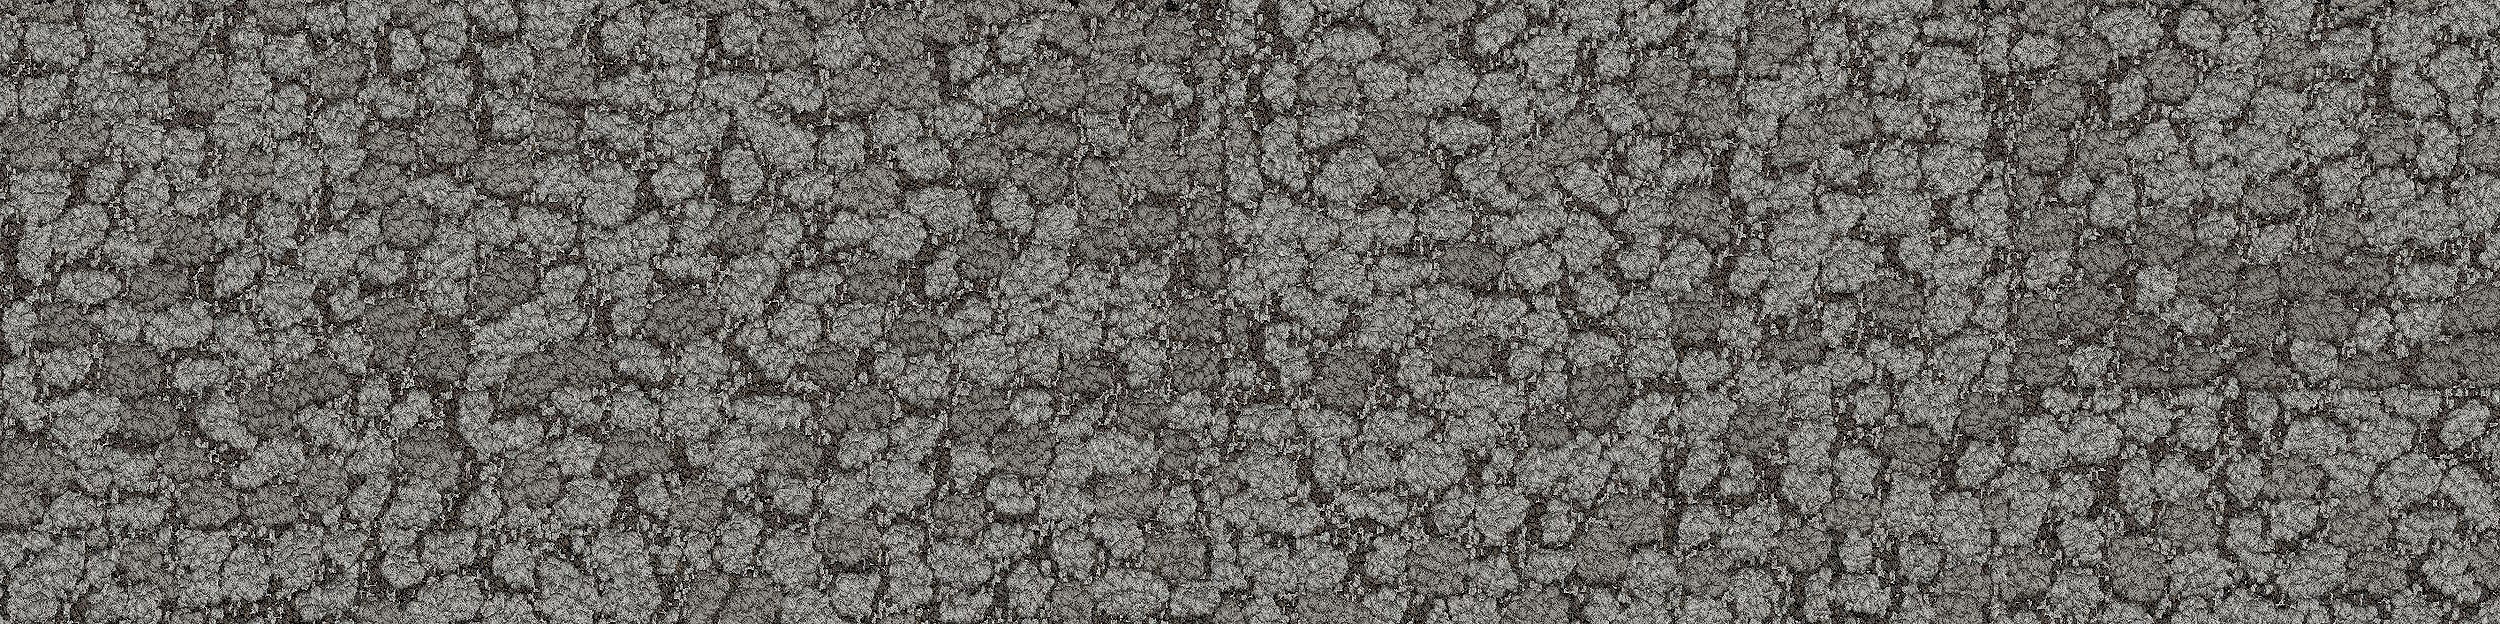 HN840 Carpet Tile In Nickel imagen número 13